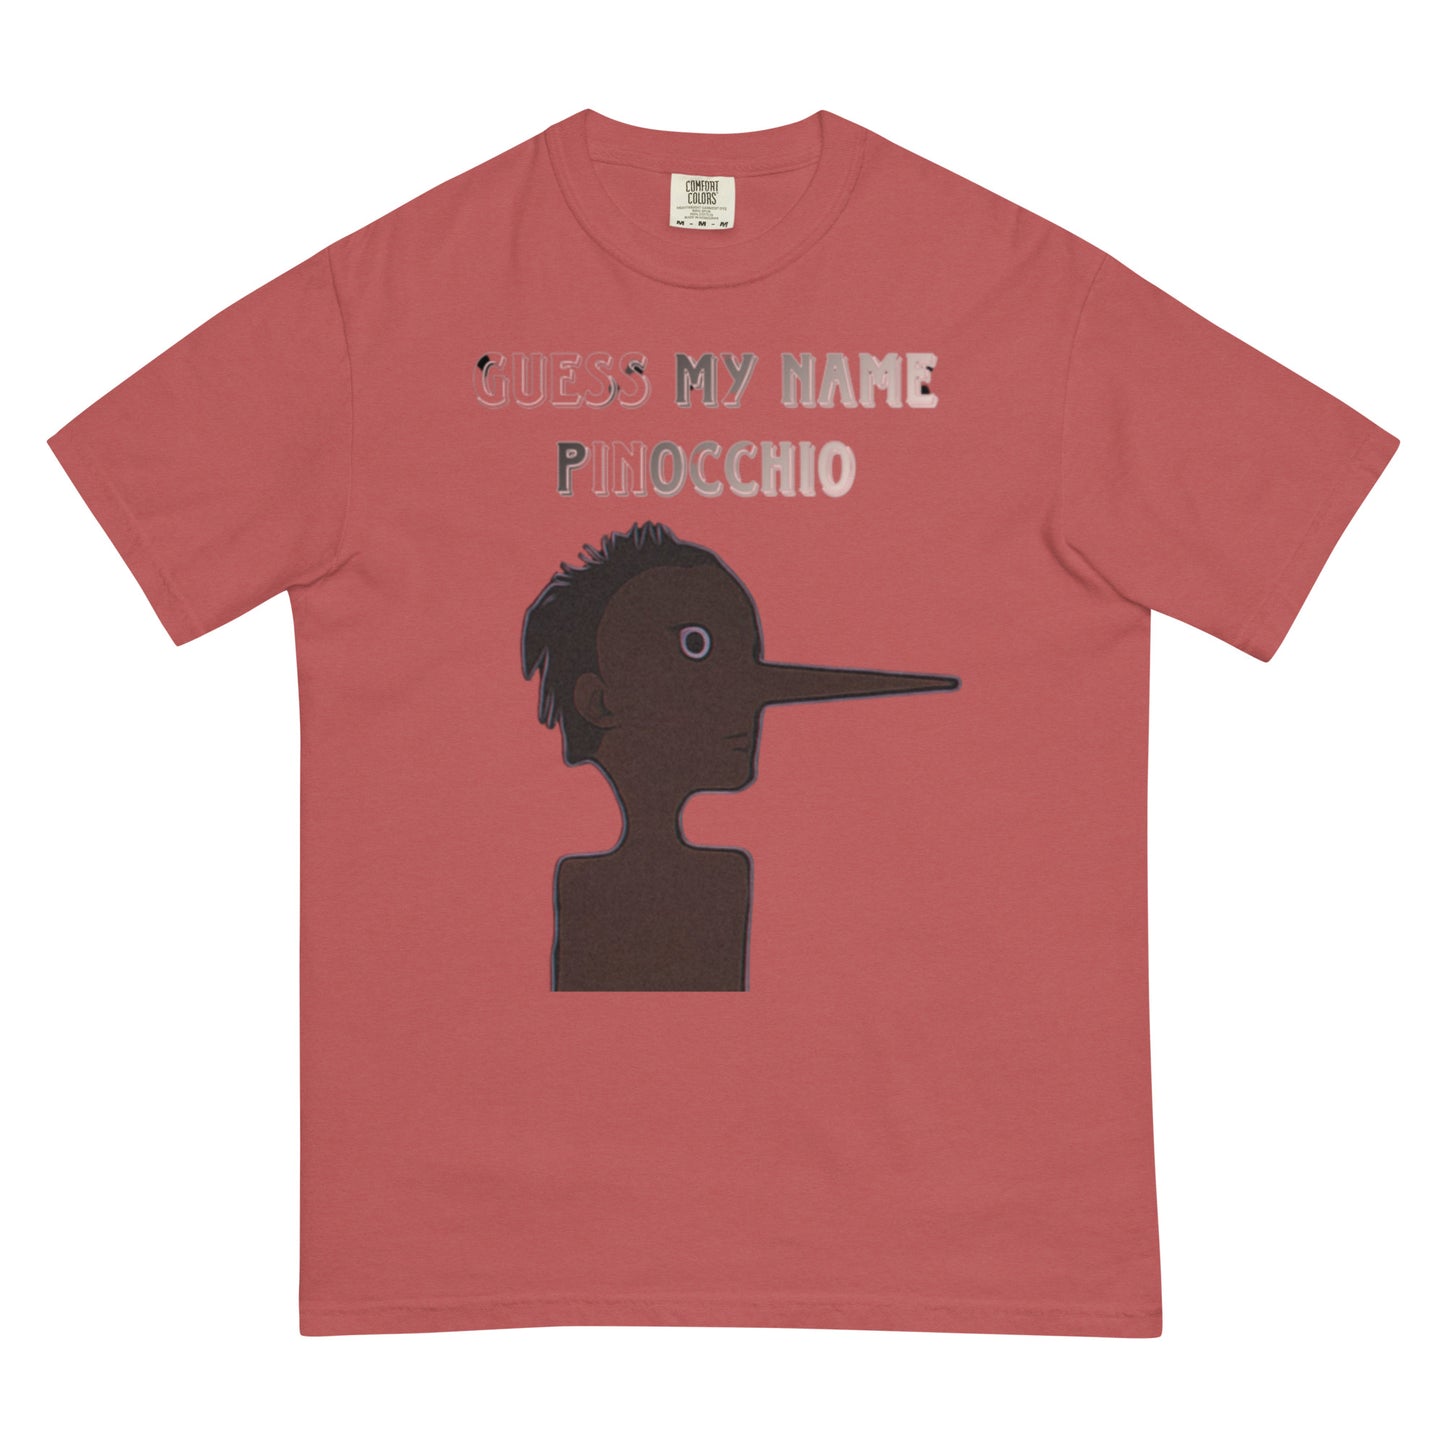 Pinocchio heavyweight t-shirt